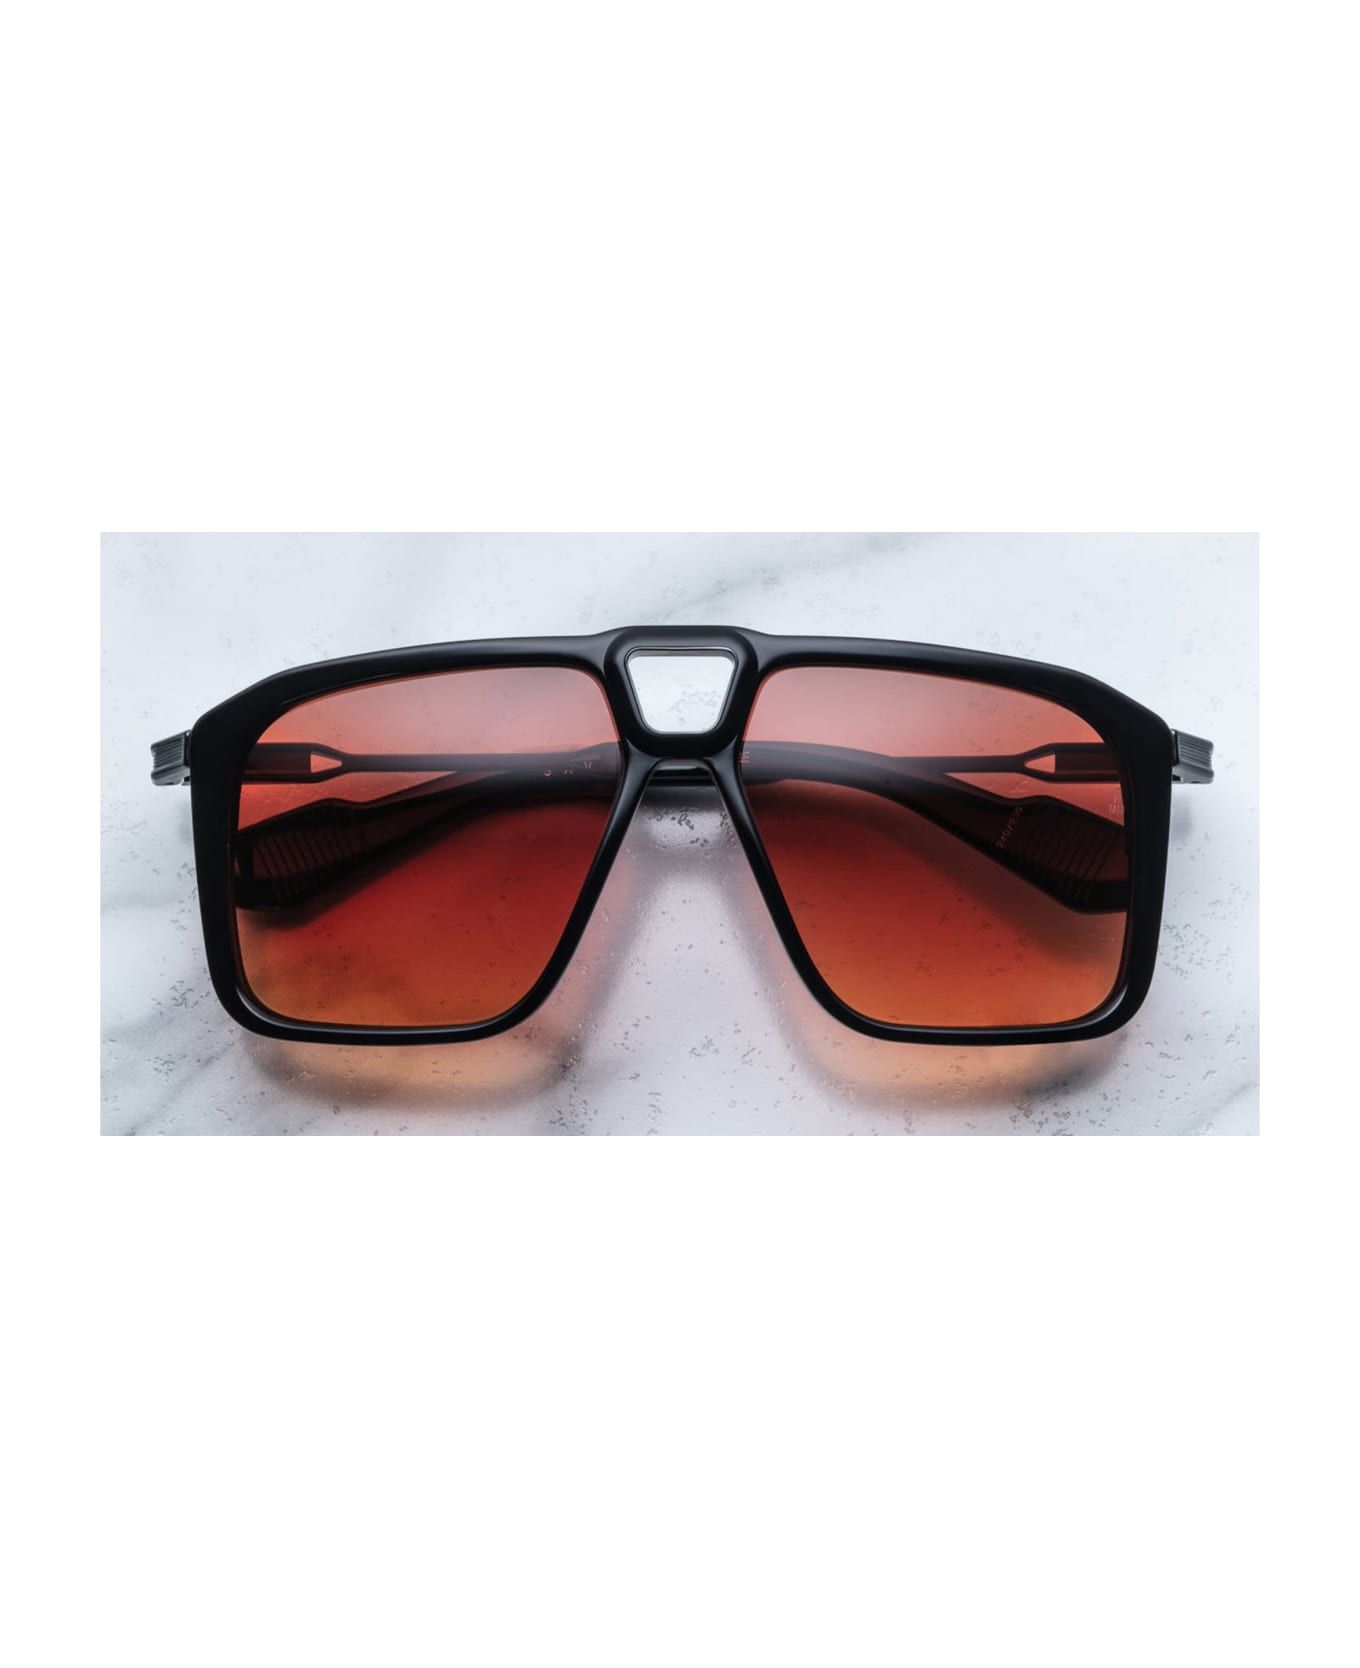 Jacques Marie Mage Savoy - Tropic Sunglasses - Black